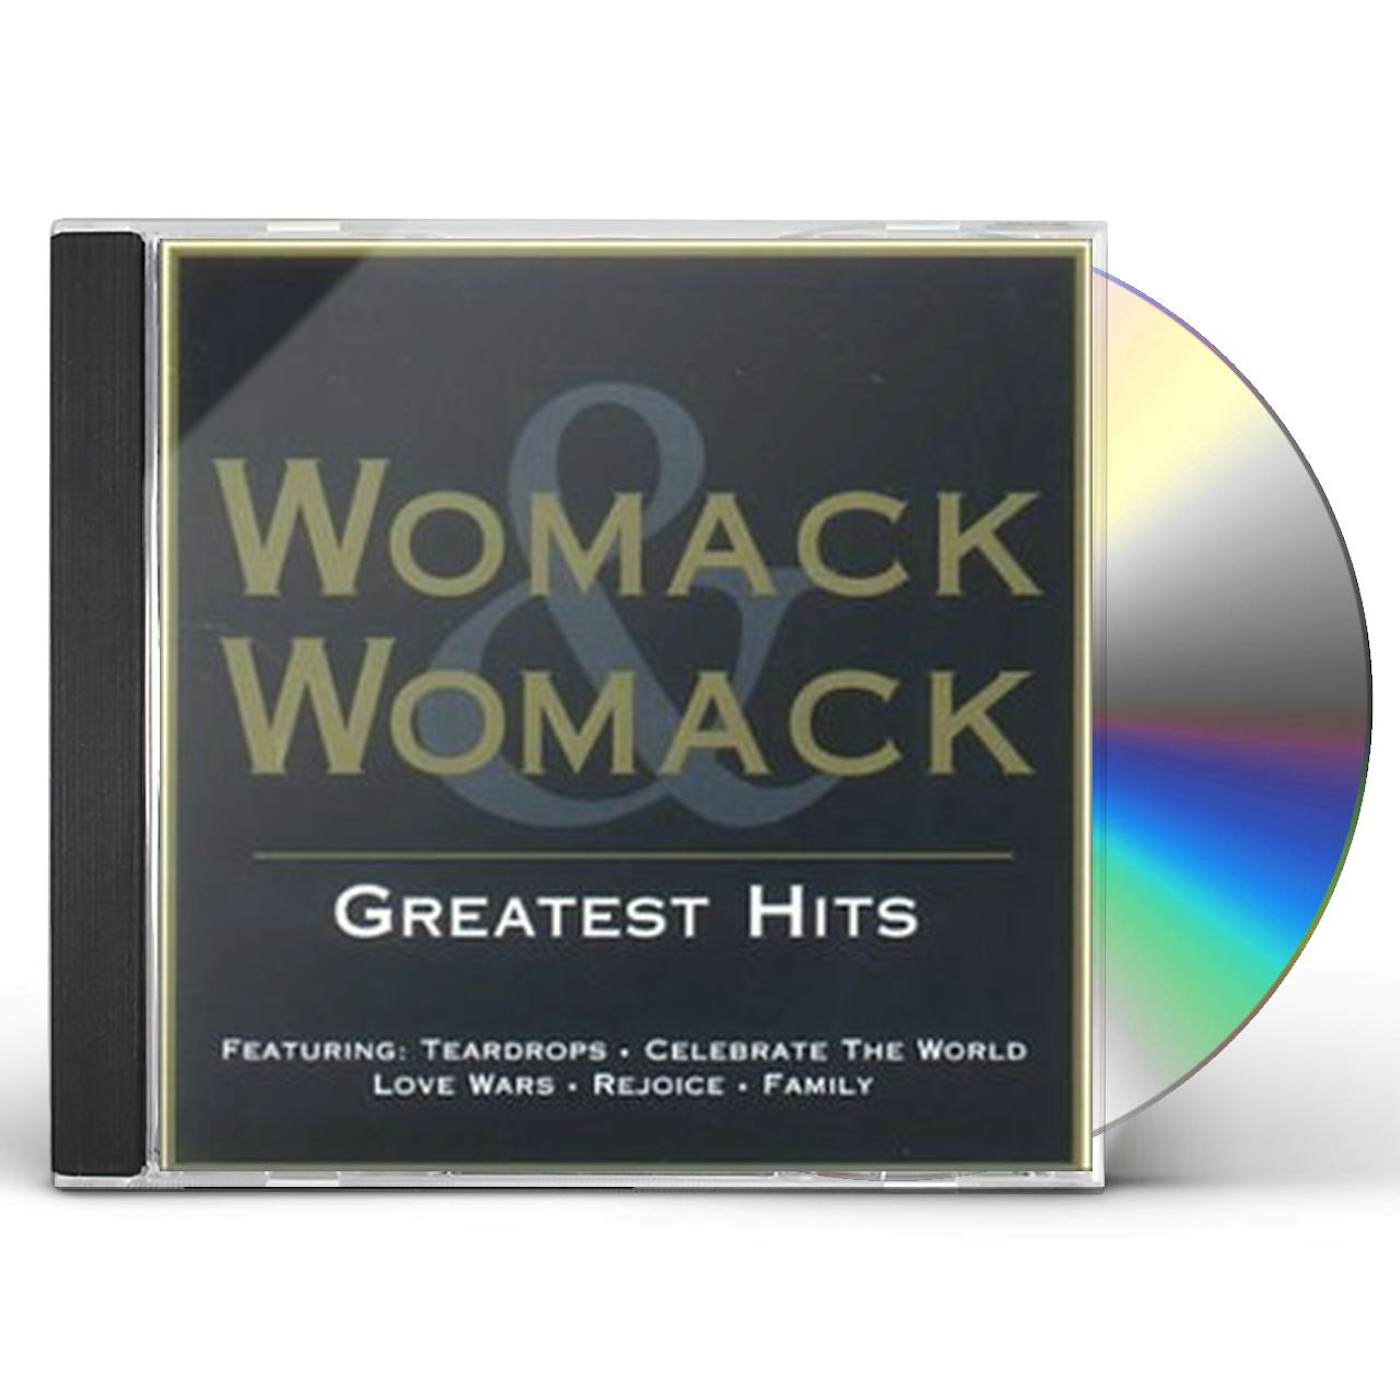 Womack & Womack GREATEST HITS CD